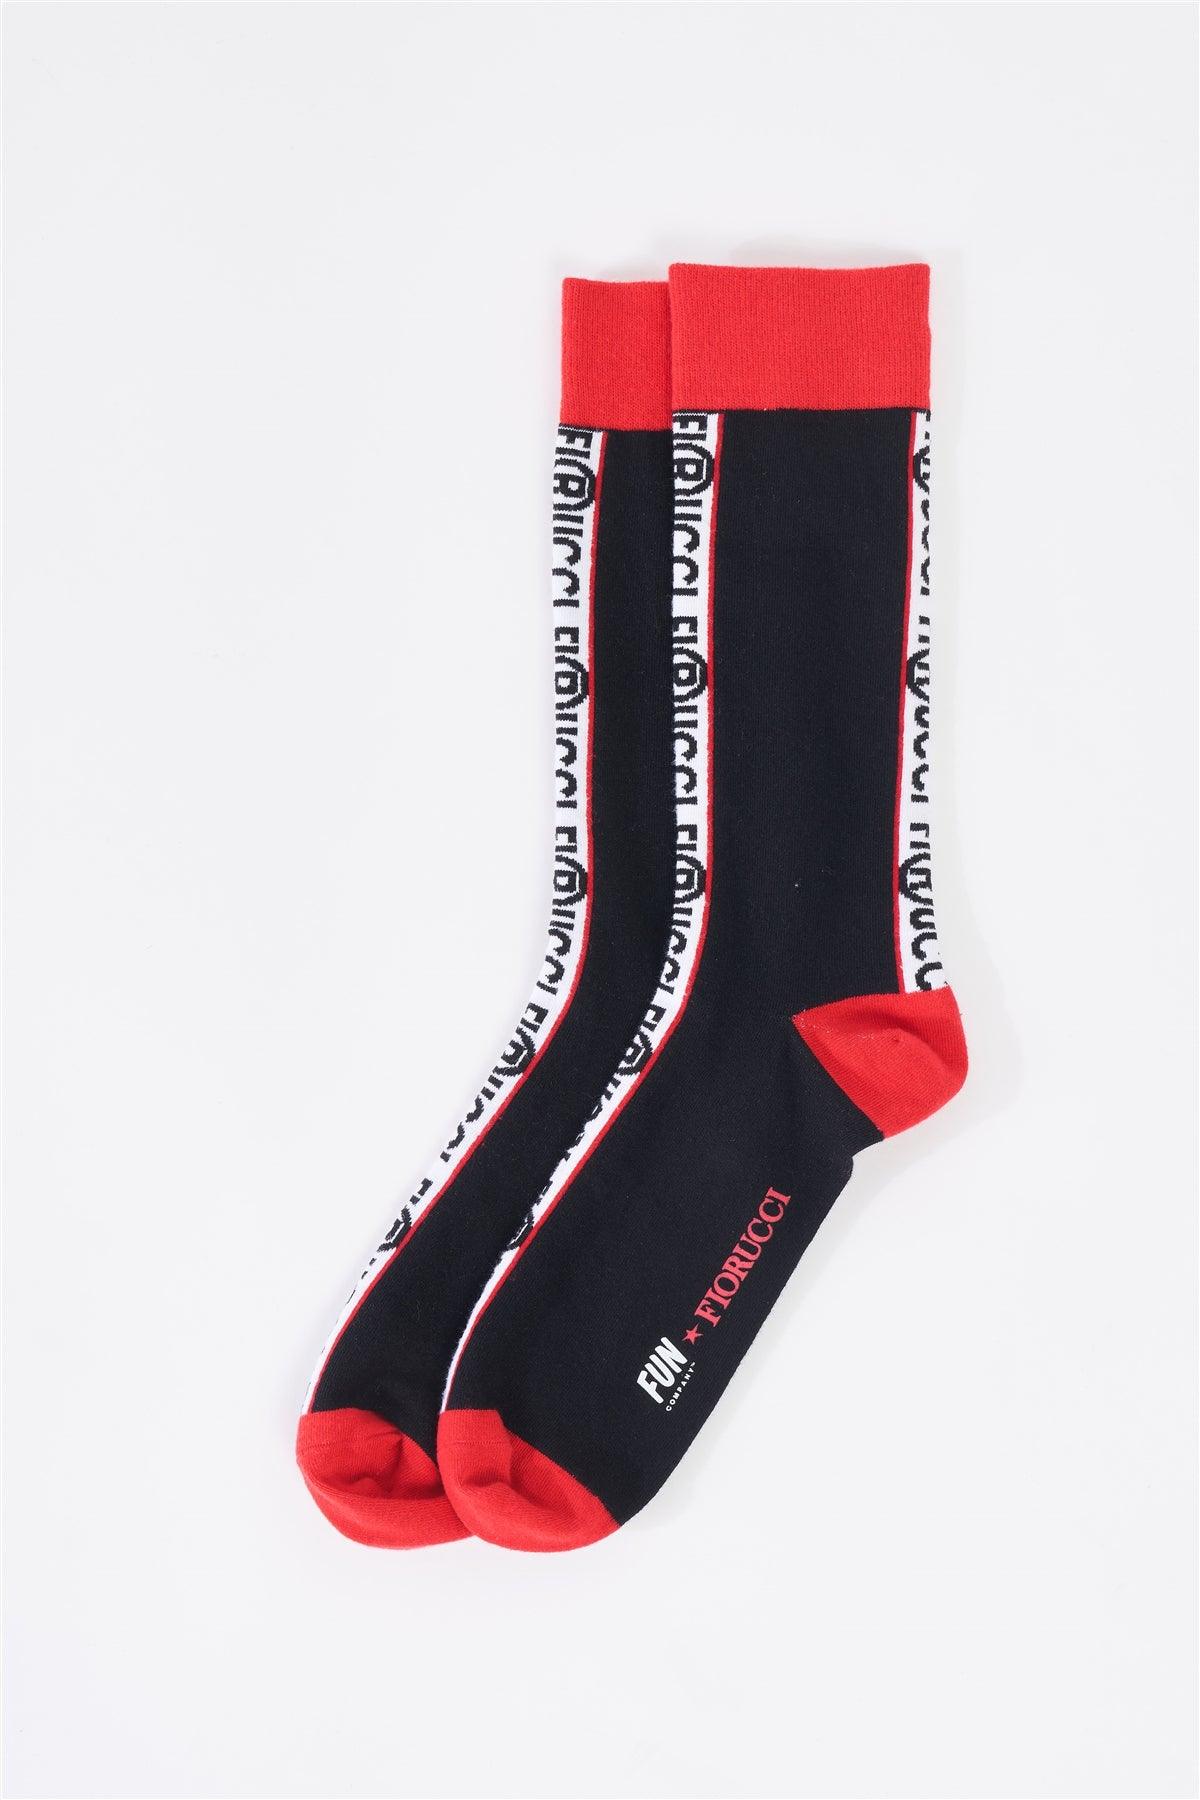 Fiorucci Fun Black & Red Mid Calf Logo Text Detail Socks /3 Pairs